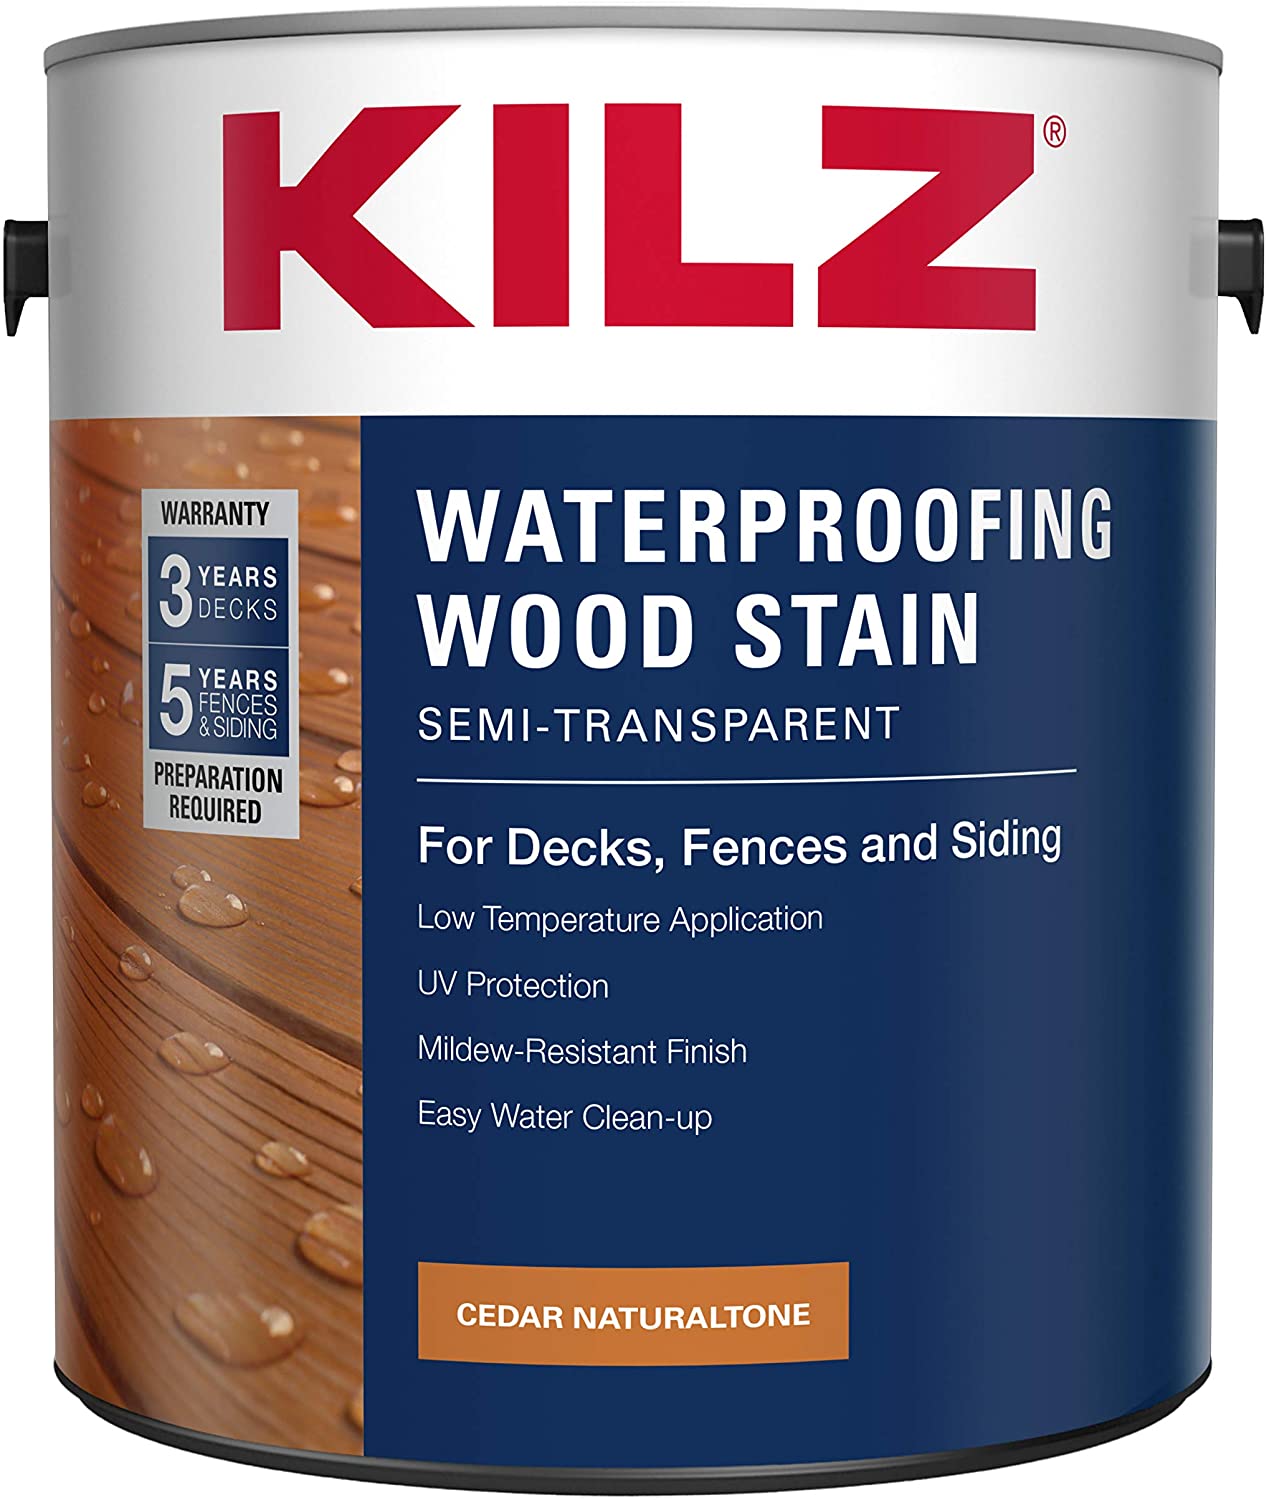 KILZ L832111 Exterior Waterproofing Wood Stain, Semi-Transparent, Cedar, 1-Gallon, 1 Gallon, 4 l